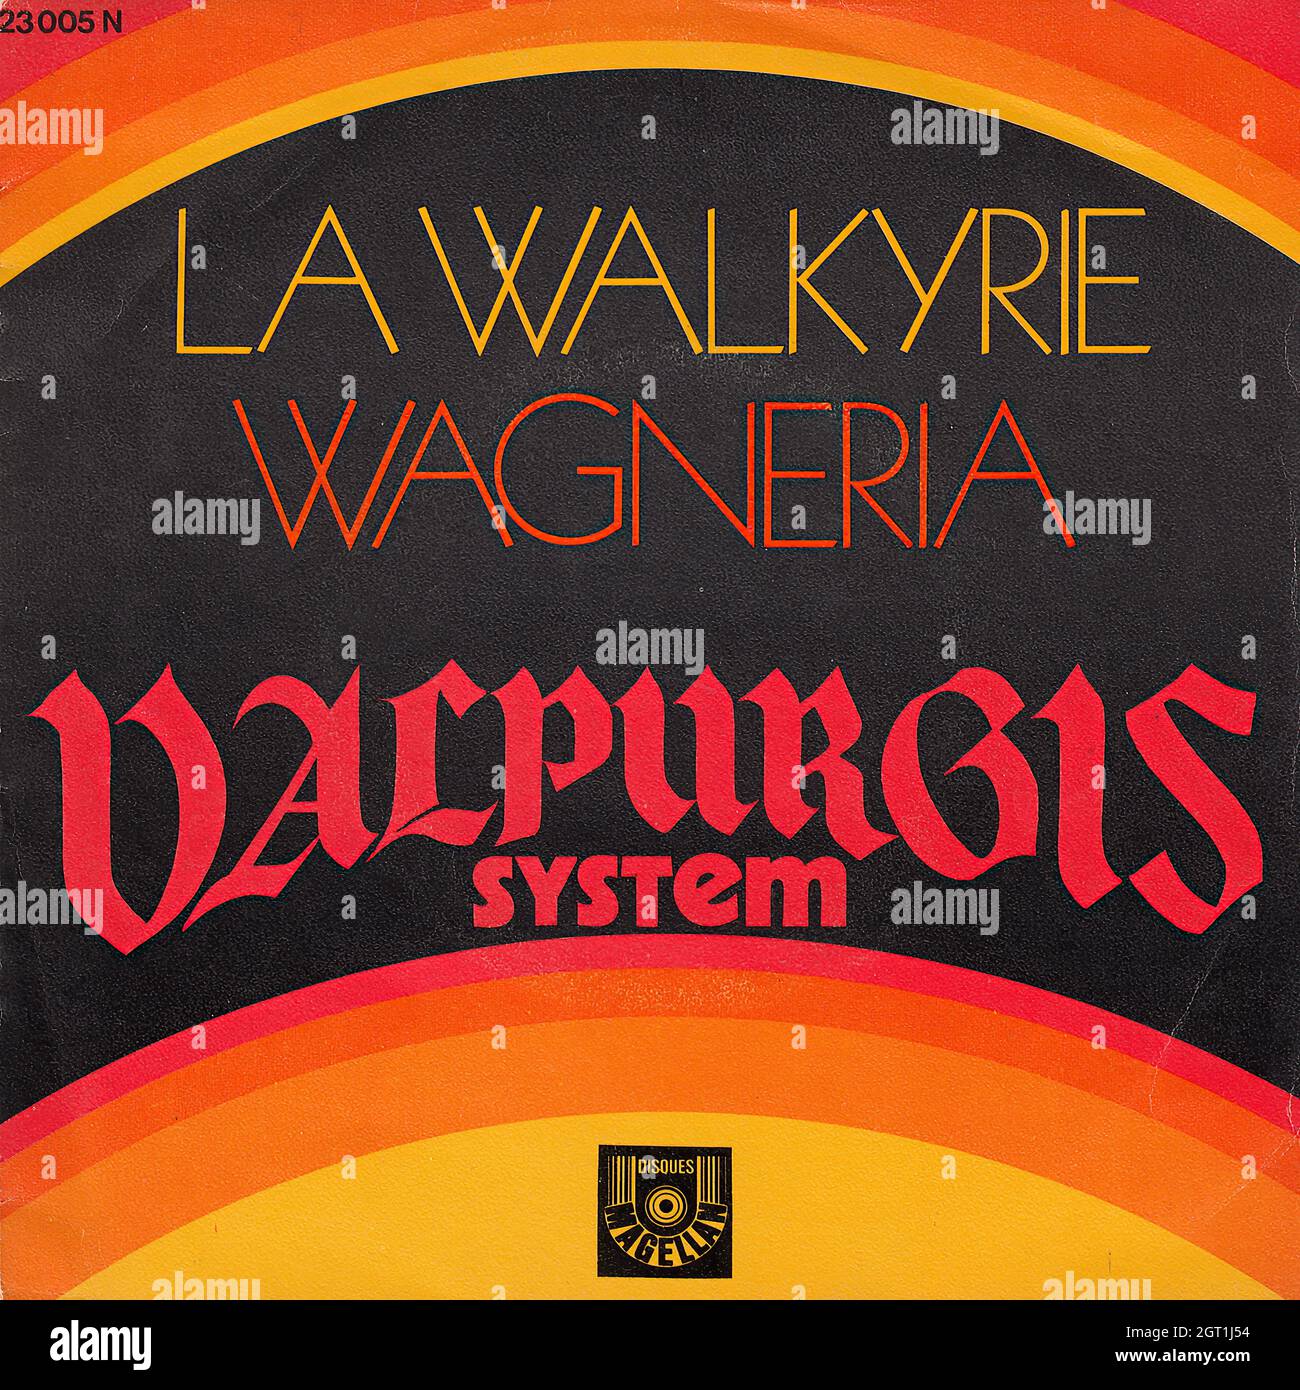 Valpurgis System - la Walkyrie - Wagneria 45rpm - copertina Vintage Vinyl Record Foto Stock